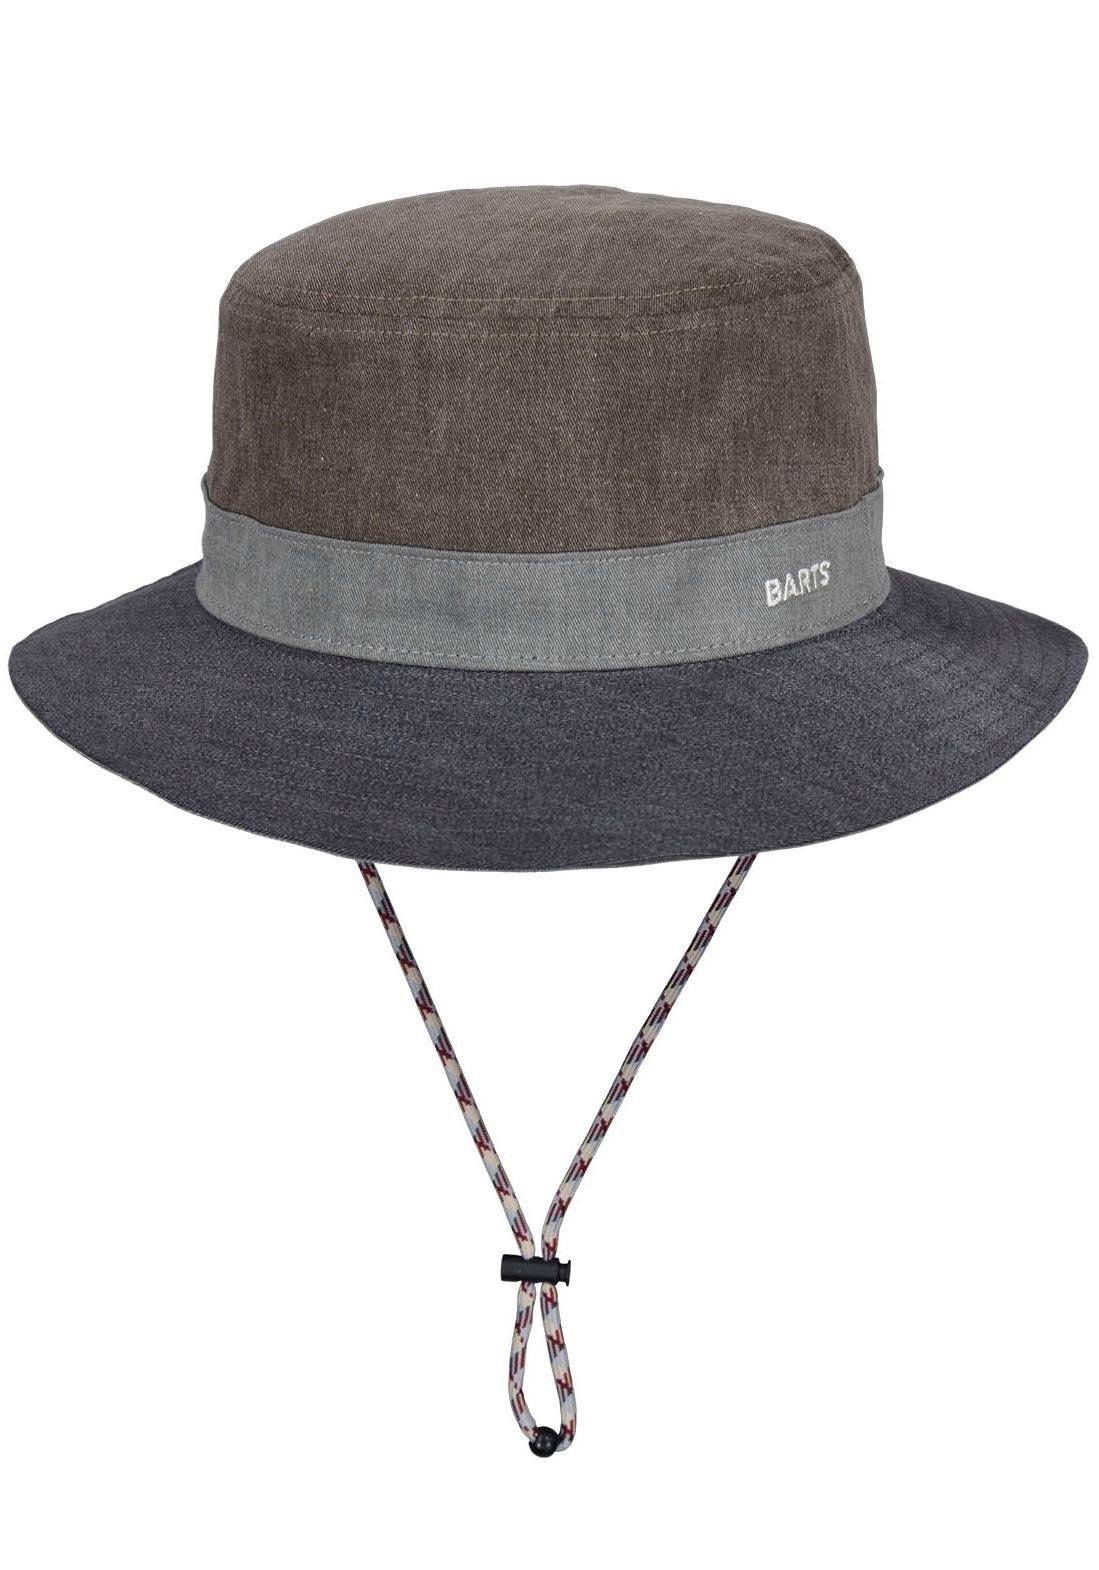 3-farbig Barts Heicrone Outdoorhut Hat